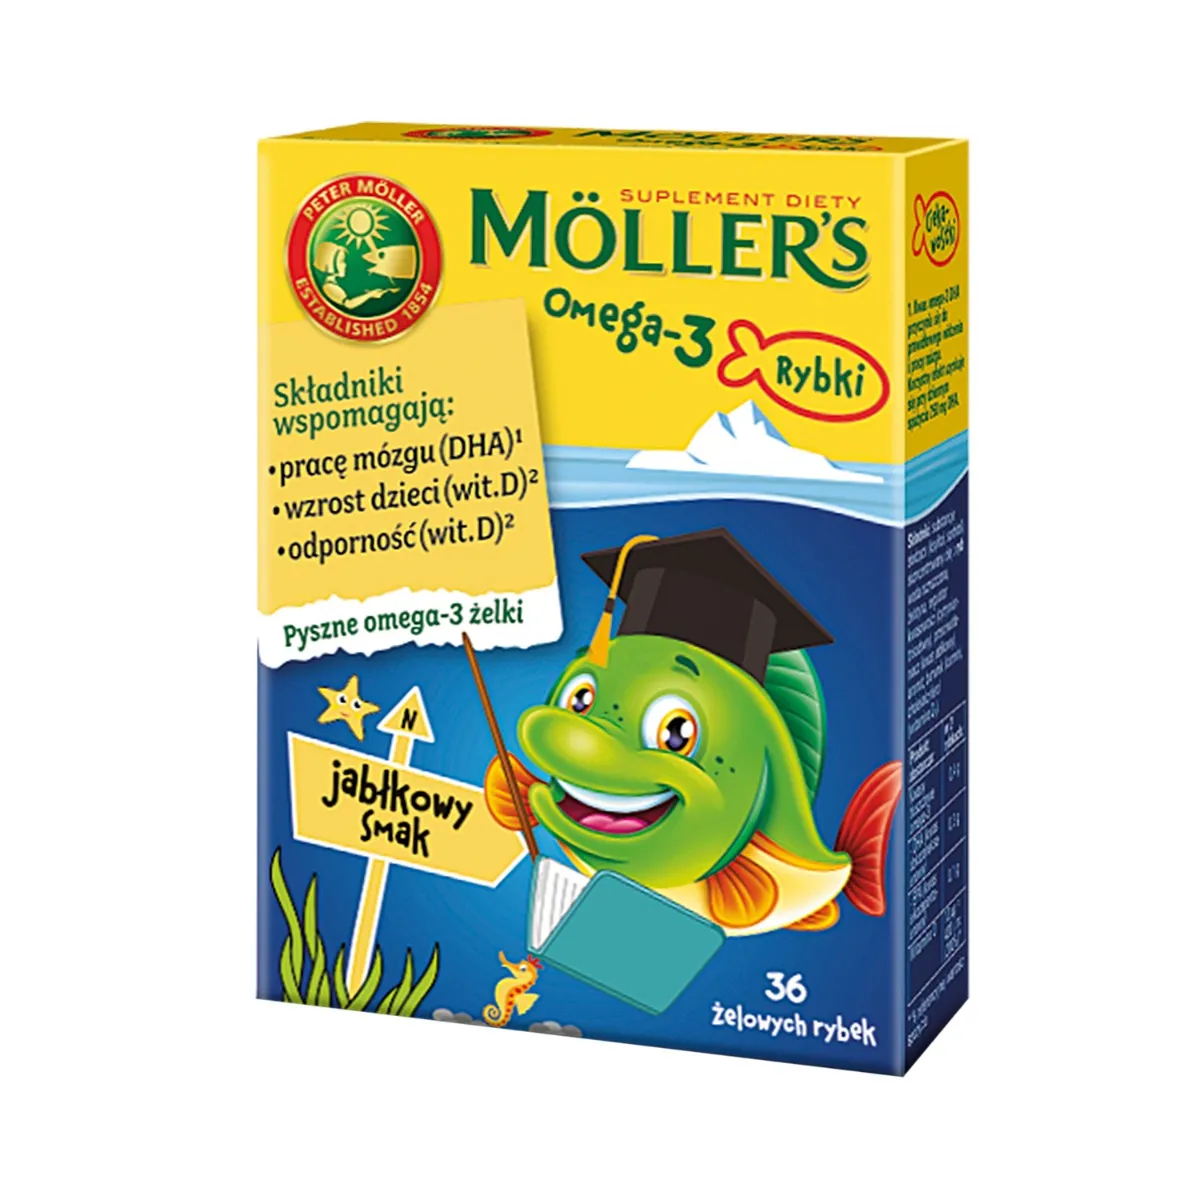 Moller's Omega-3 Rybki, suplement diety, smak jabłkowy, 36 żelków